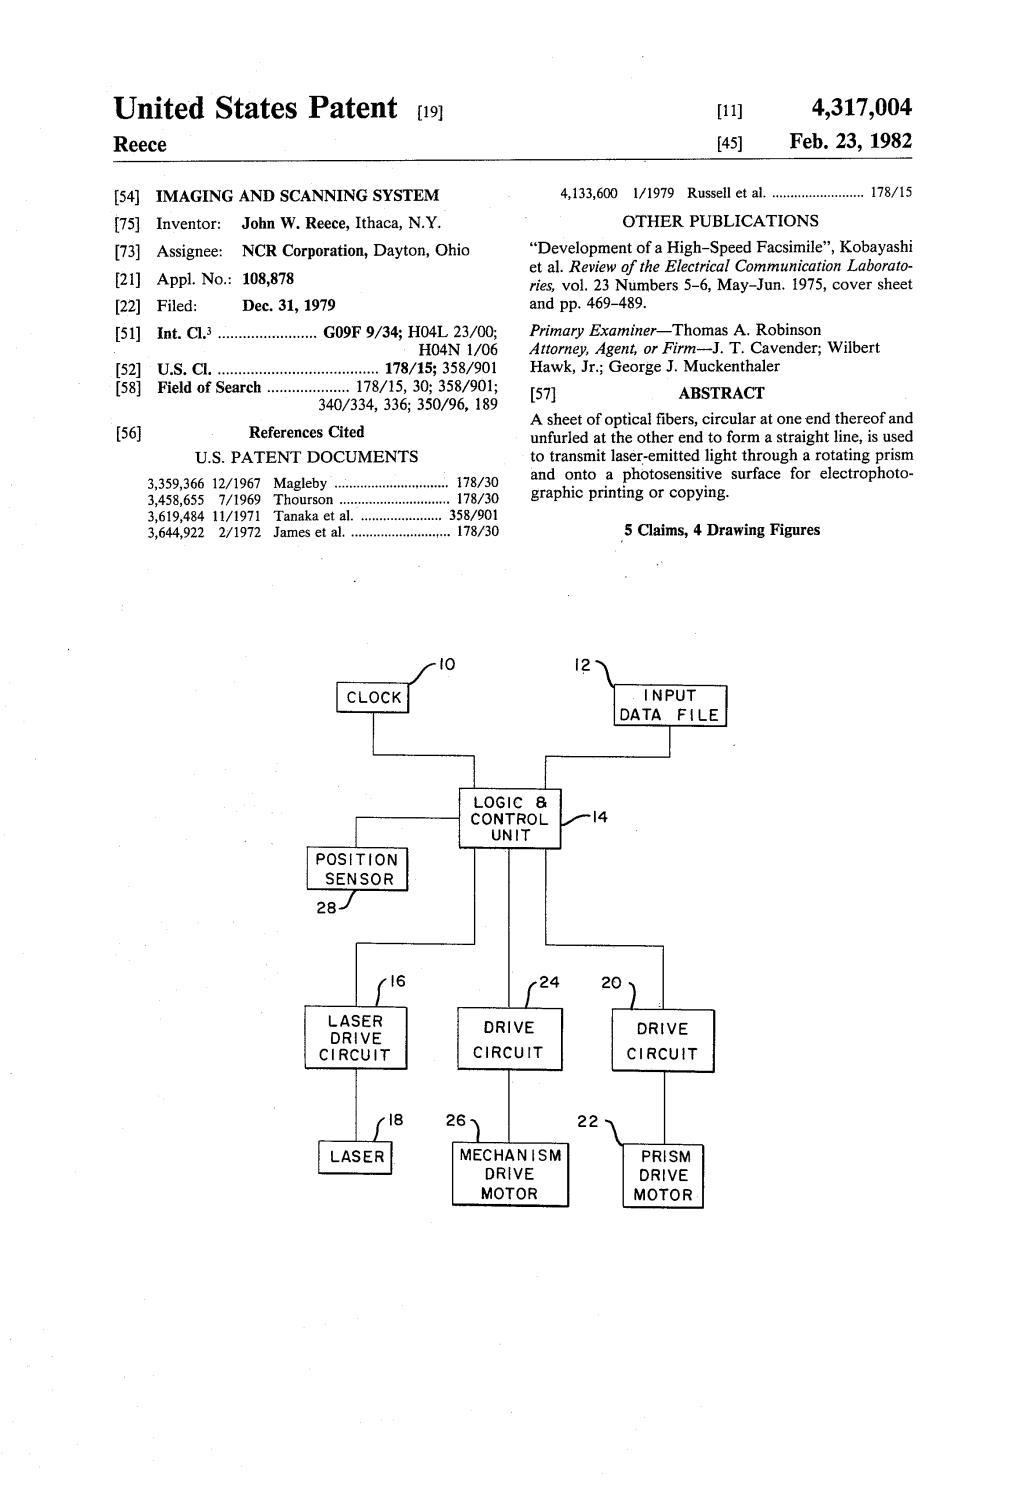 United States Patent (19) 11) 4,317,004 Reece (45) Feb